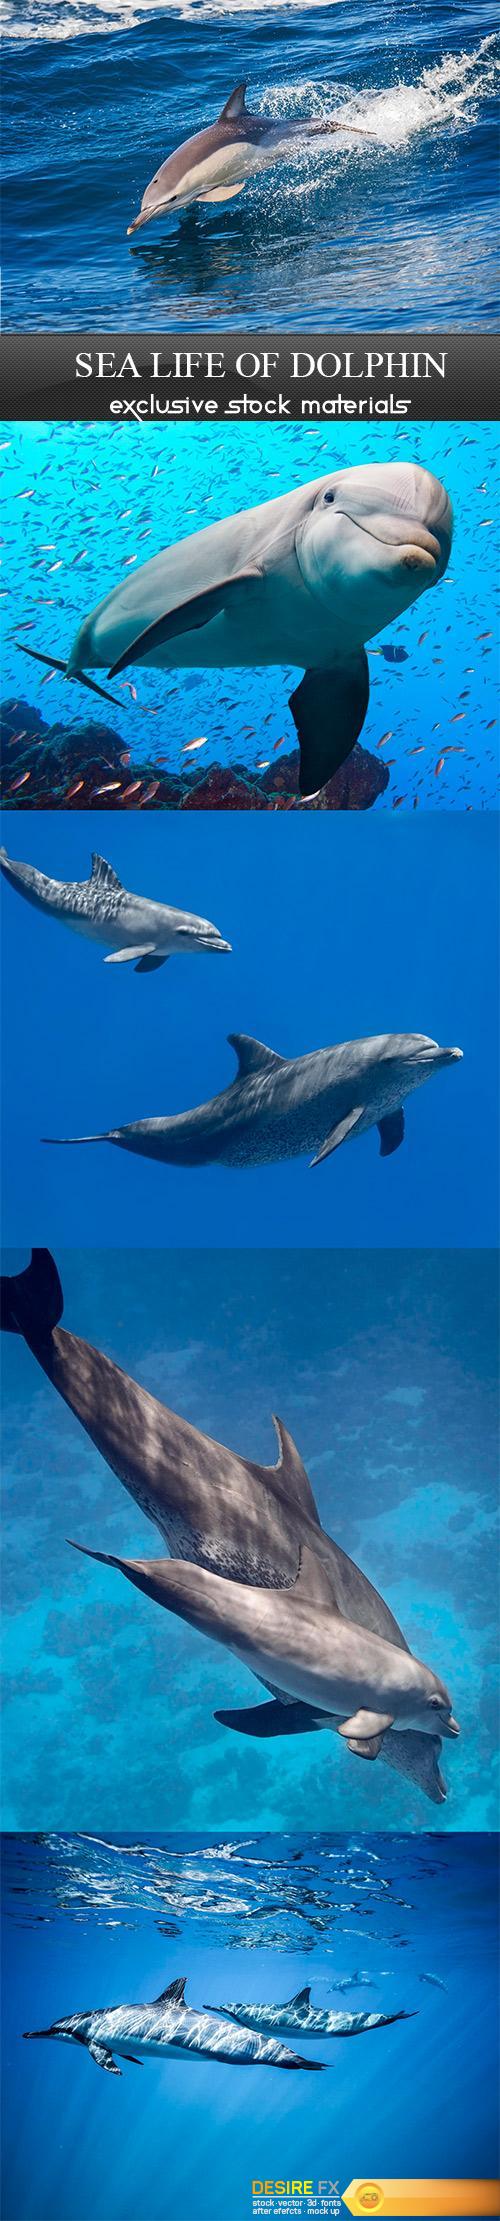 Sea life of dolphin - 5 UHQ JPEG